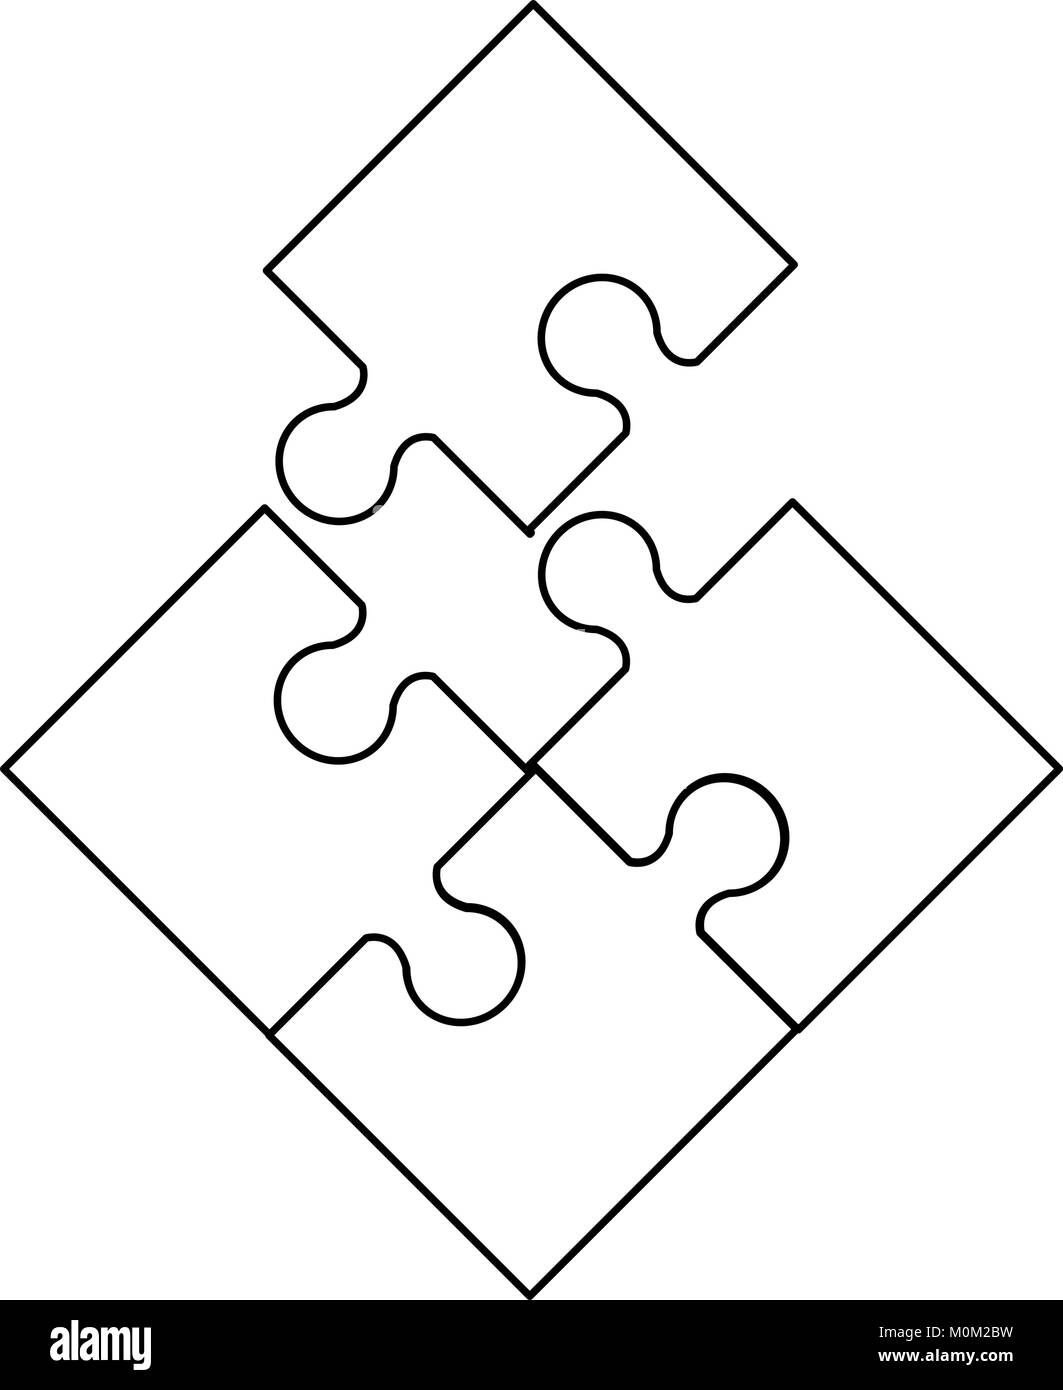 Jigsaw Puzzle símbolo Imagen Vector de stock - Alamy